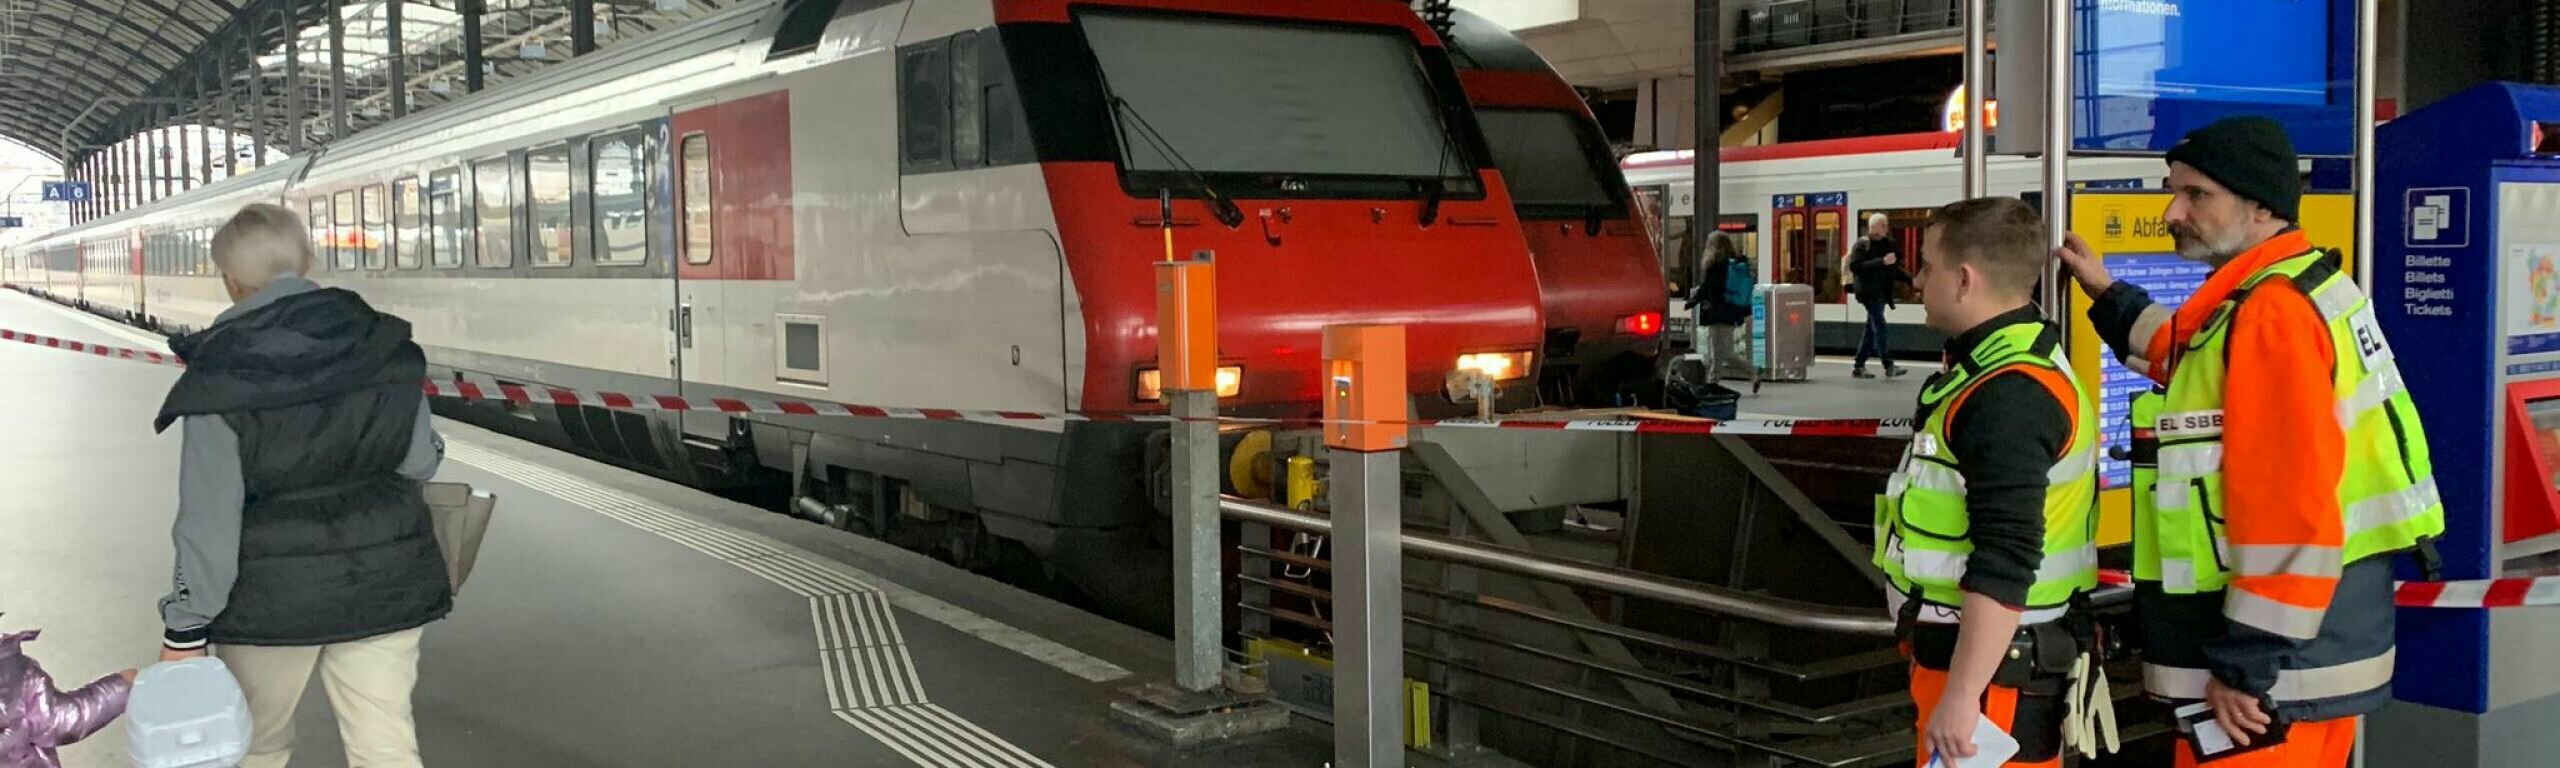 Gare de Lucerne: un InterRegio entre en collision avec un heurtoir